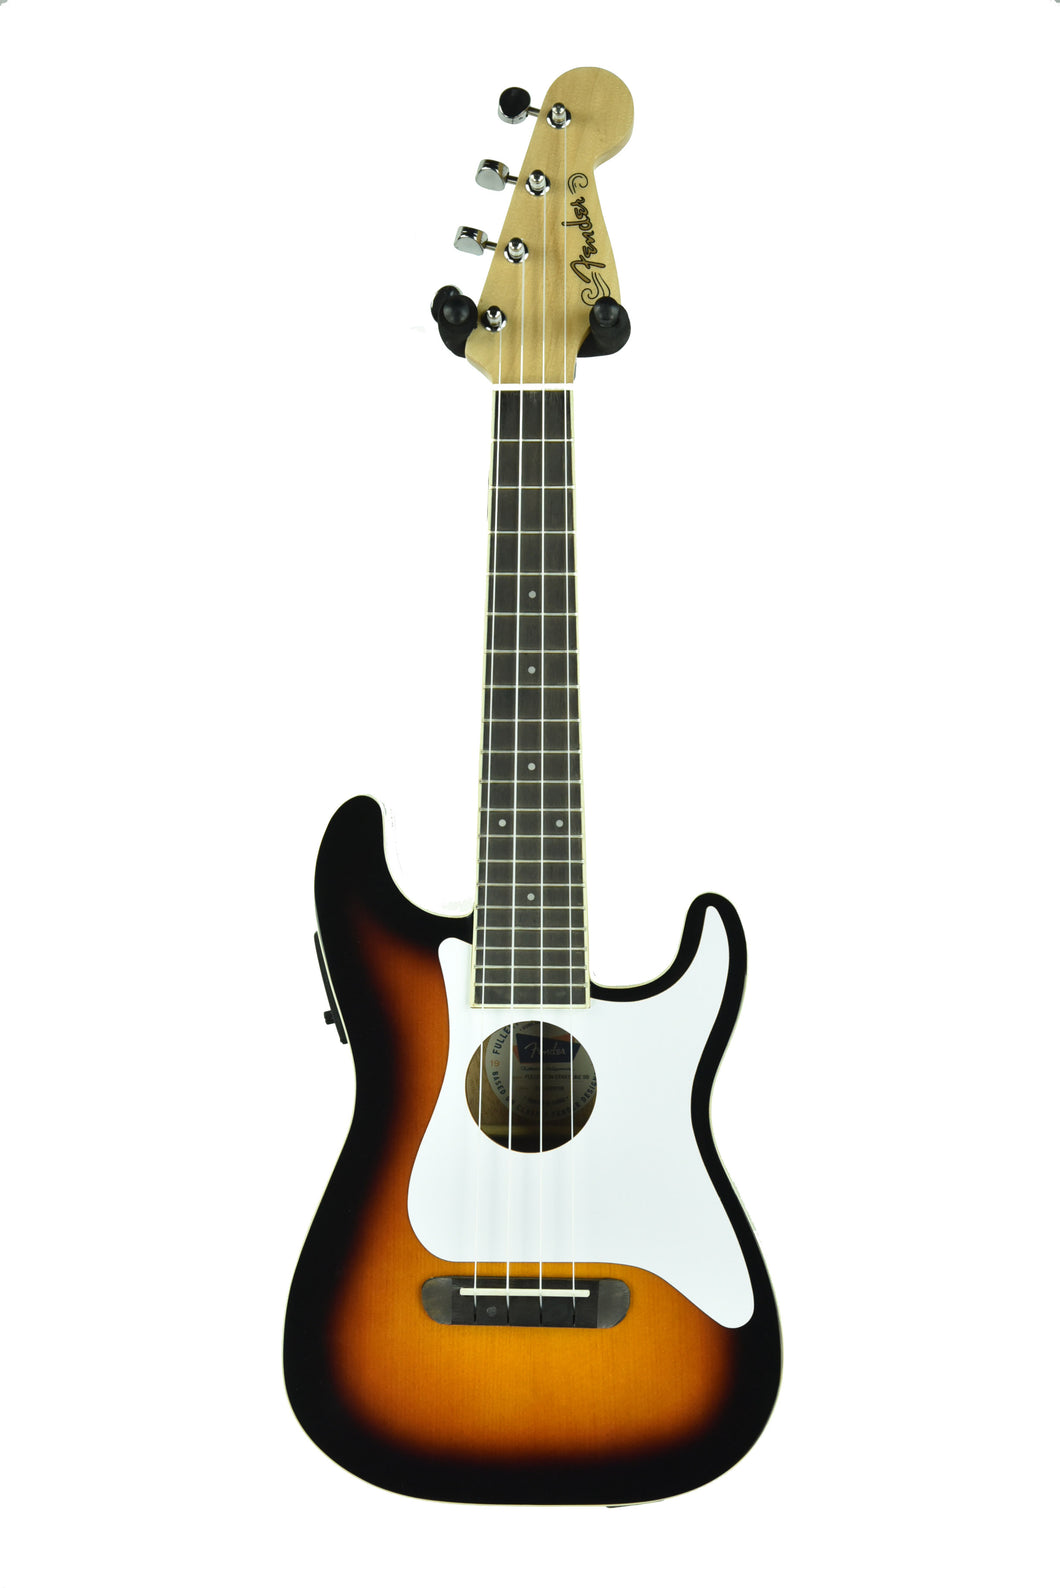 Fender® Fullerton Strat Ukulele in Sunburst CAU2000768 - The Music Gallery